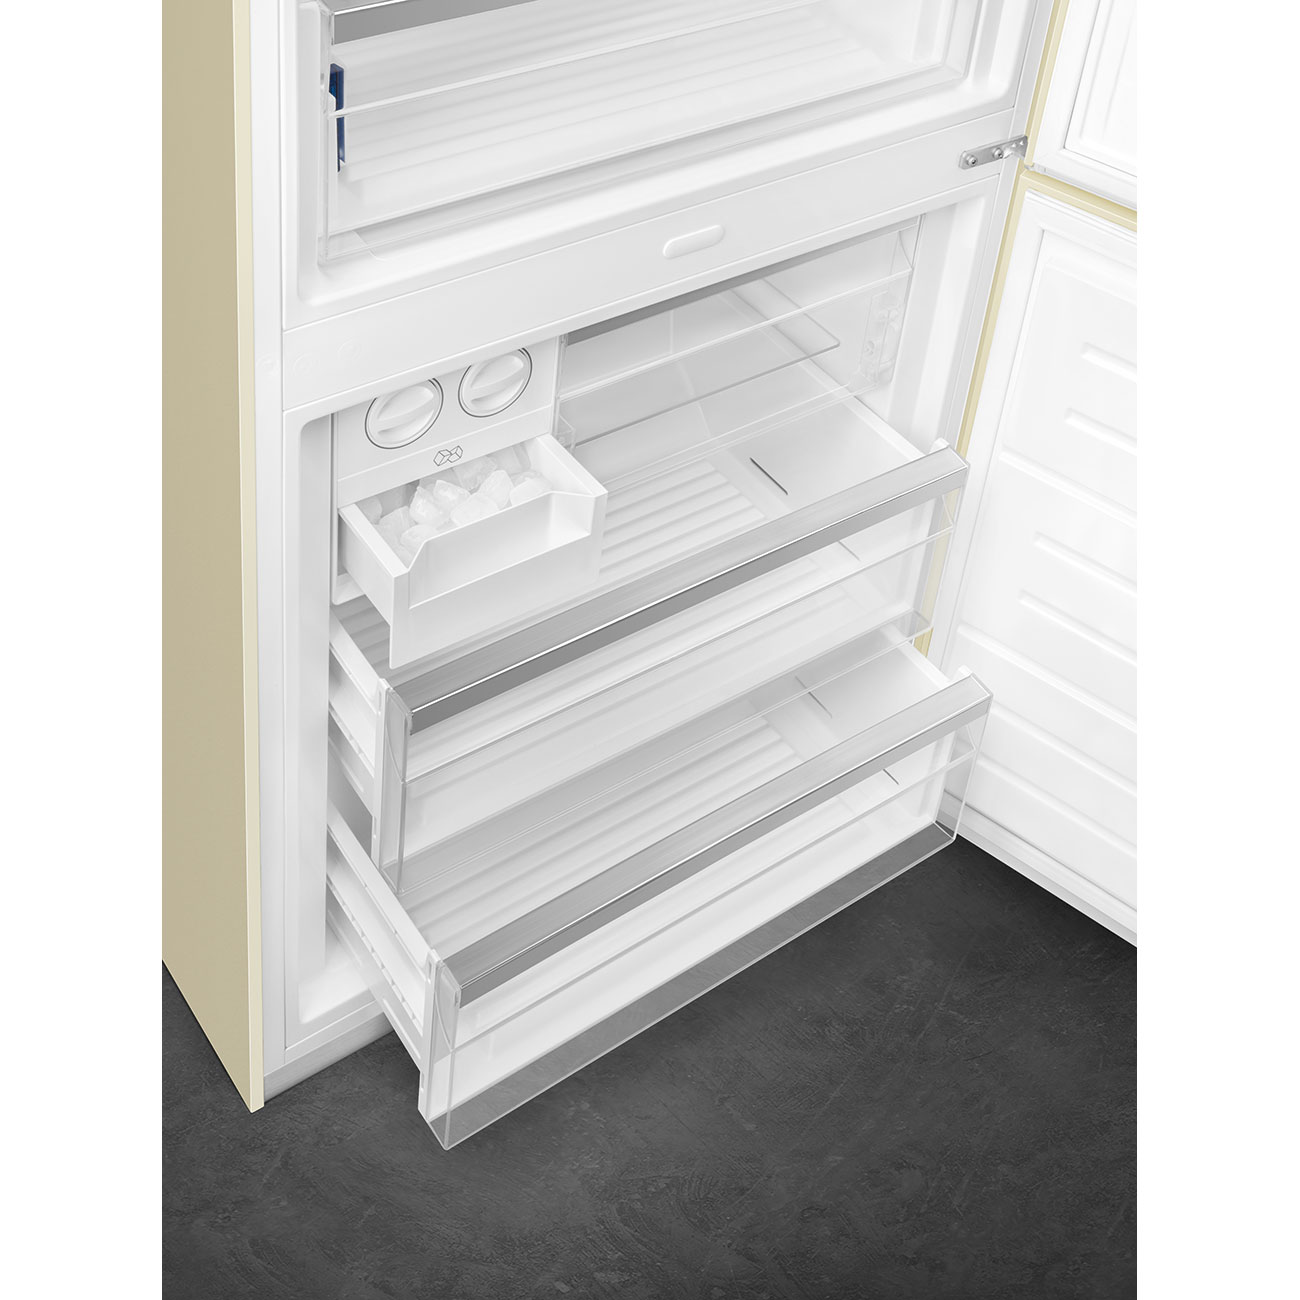 Bottom Mount Free standing refrigerator - Smeg_10